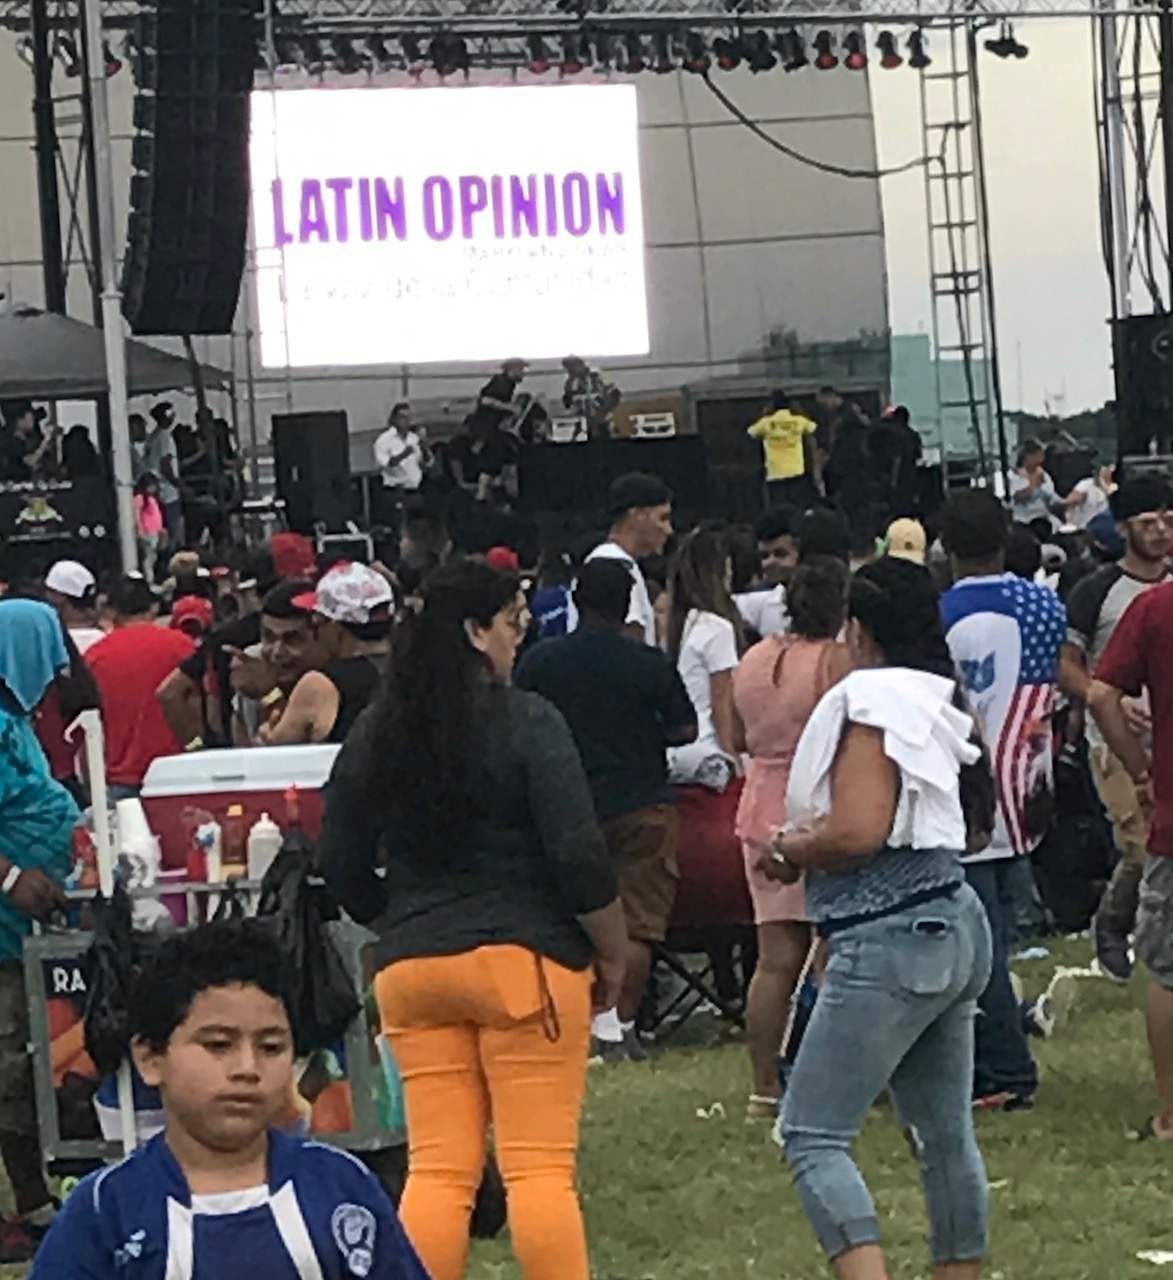 Festival Latino de Maryland riqueza cultural y musical Latin Opinion